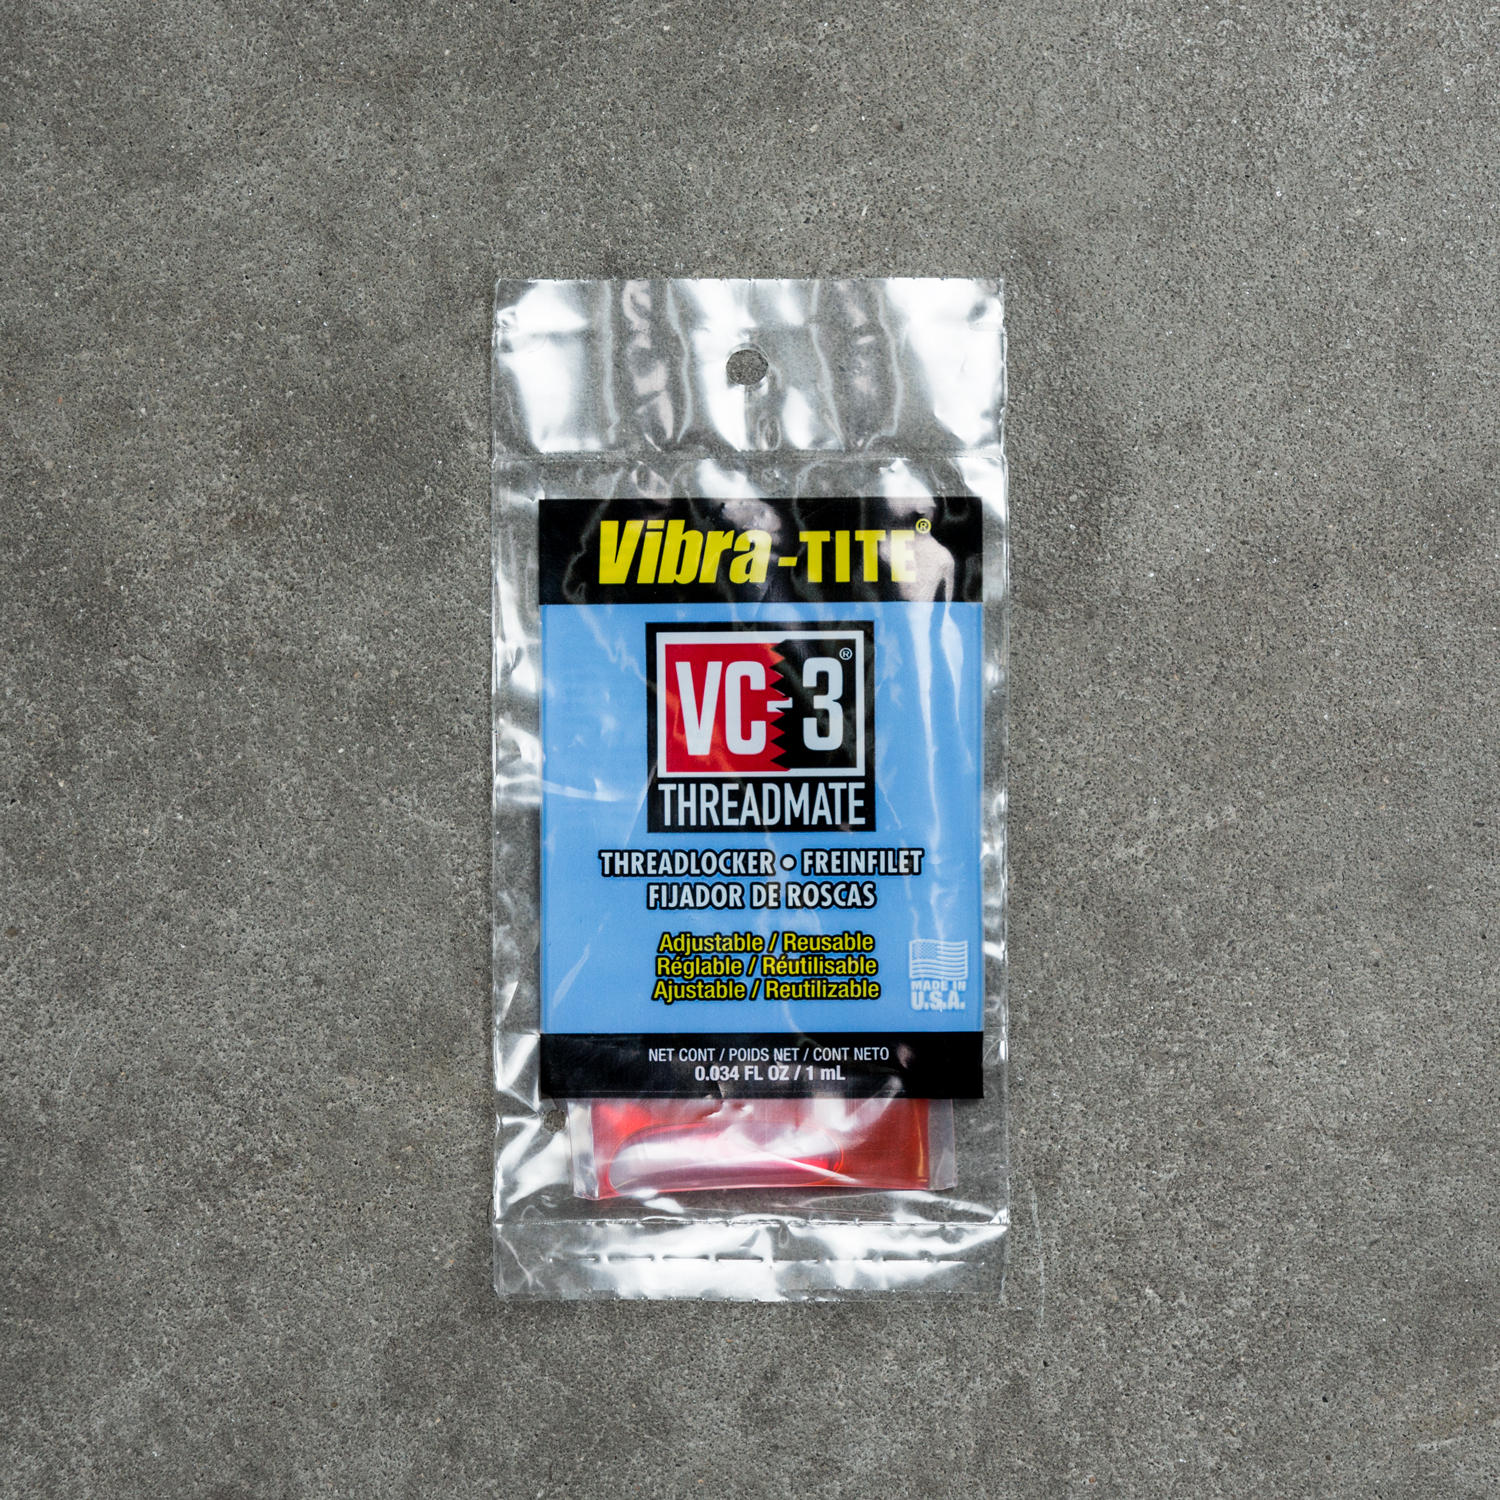 Twin Pack Of Vibra-tite VC-3 Adjustable & Reusable Thread Lock 1ml Sachet X2 